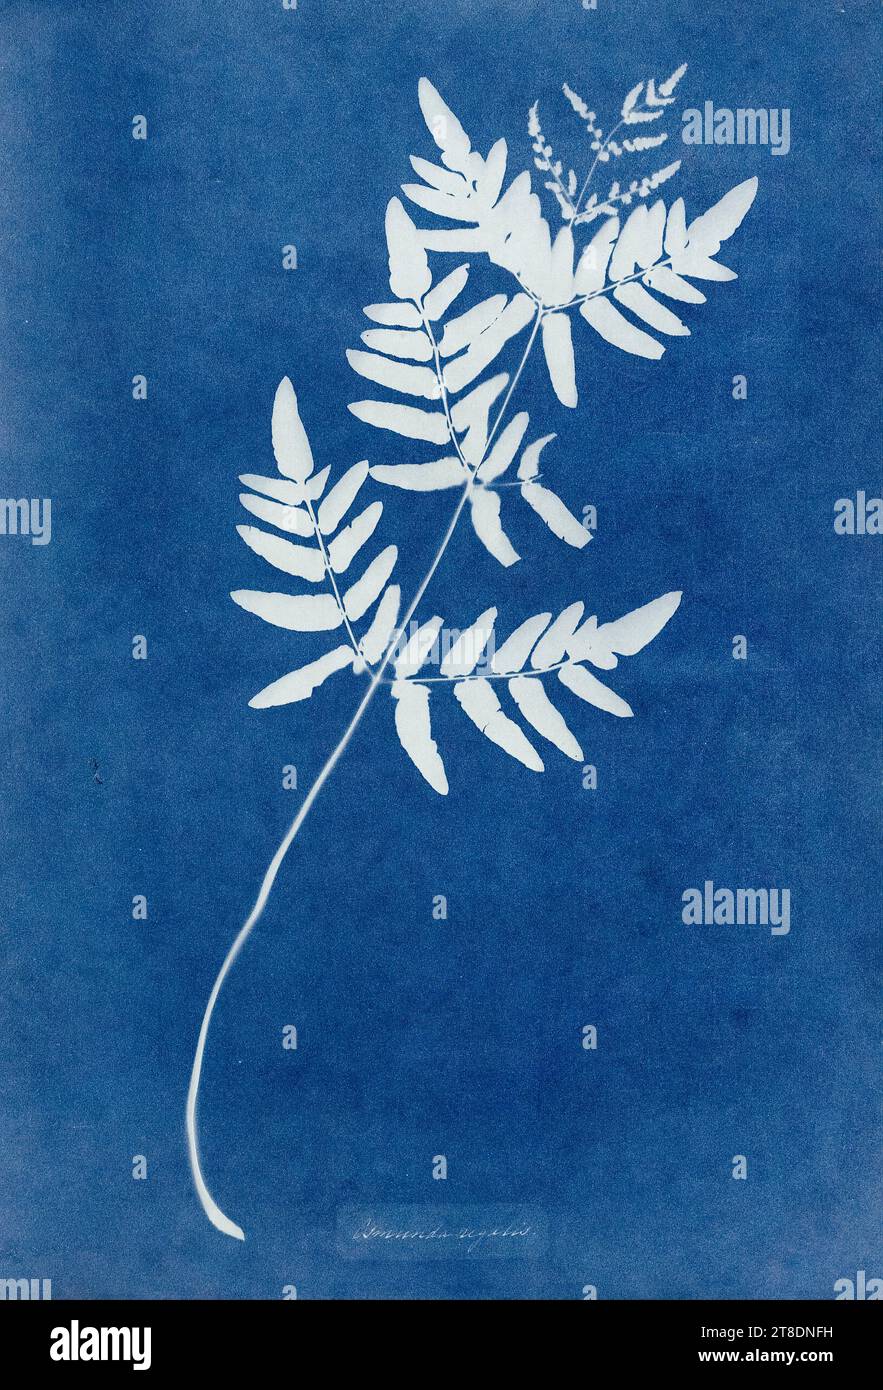 Anna Atkins, Osmunda Rigalis (Australia) fern, cyanotype photogram, 1853-1854 Stock Photo